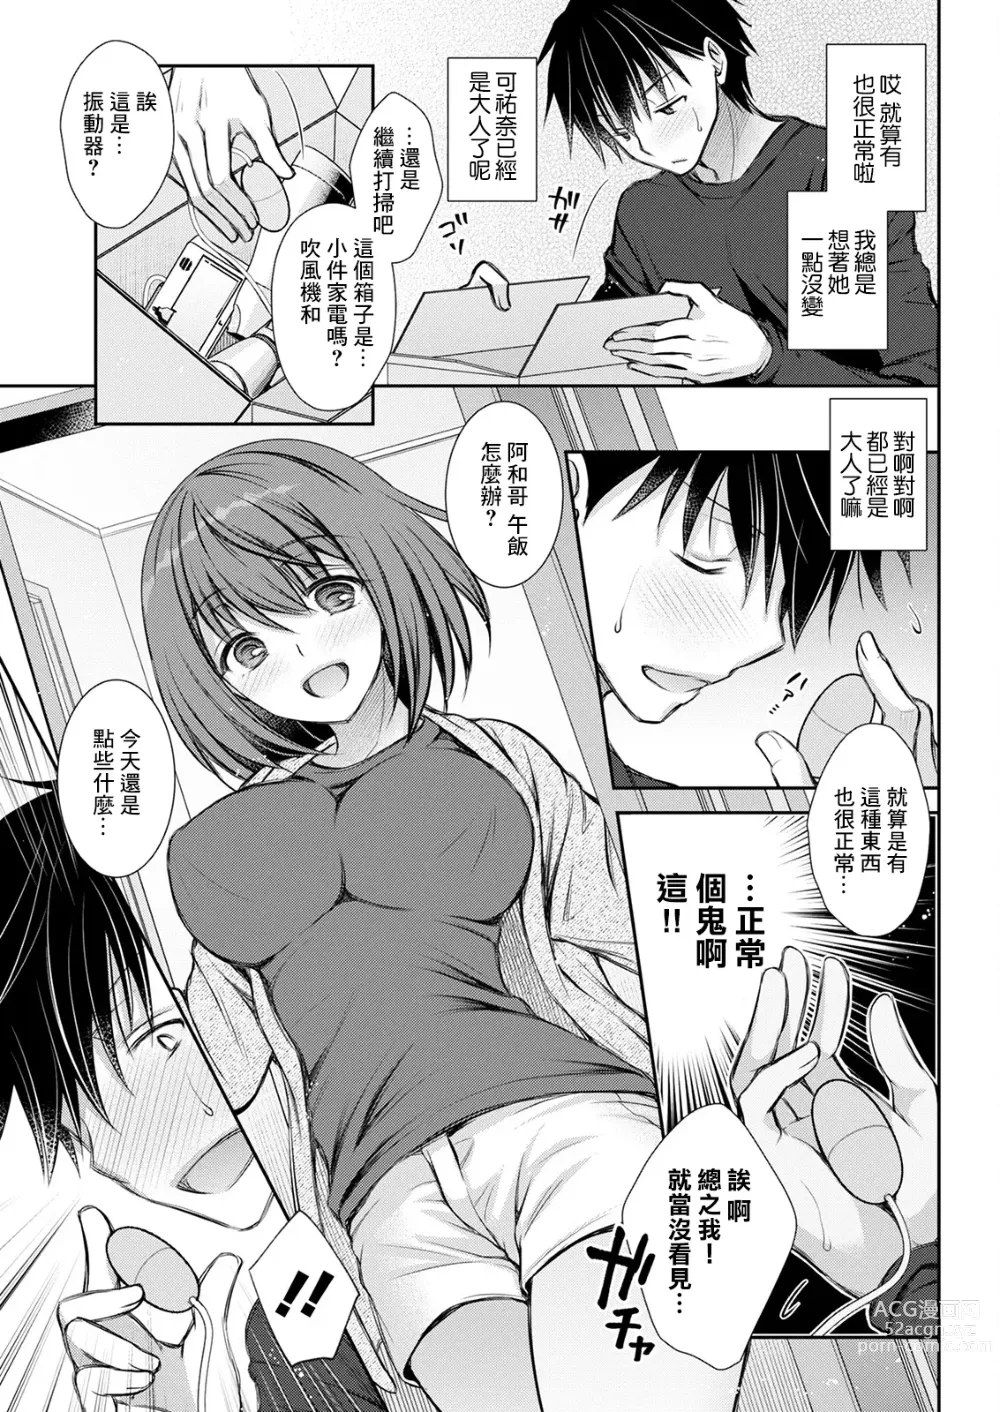 Page 3 of manga Yokubari Position